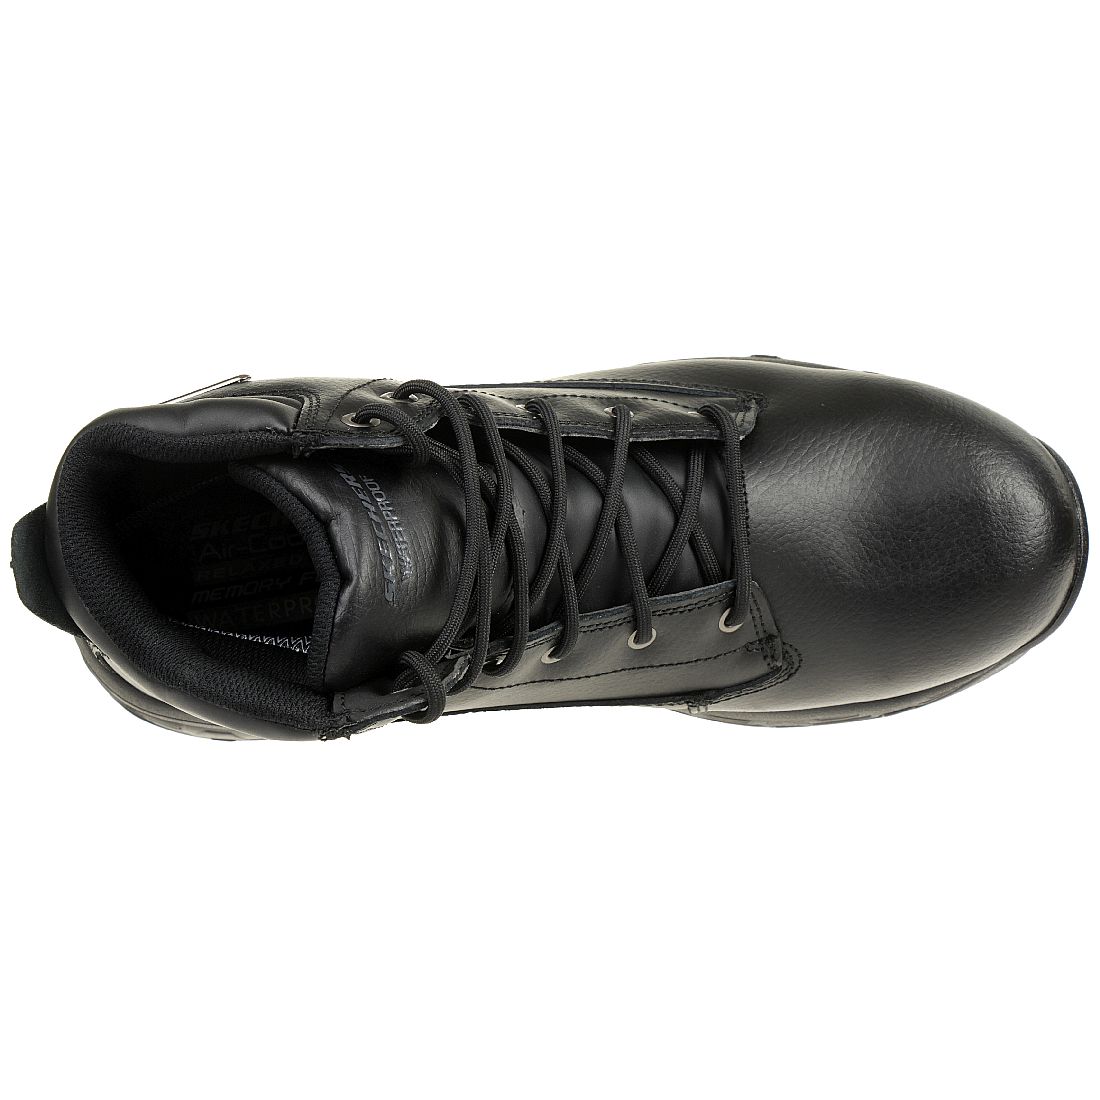 Skechers Morson SINATRO Stiefel Outdoor Schuhe Waterproof Leder RELAXED FIT BLK